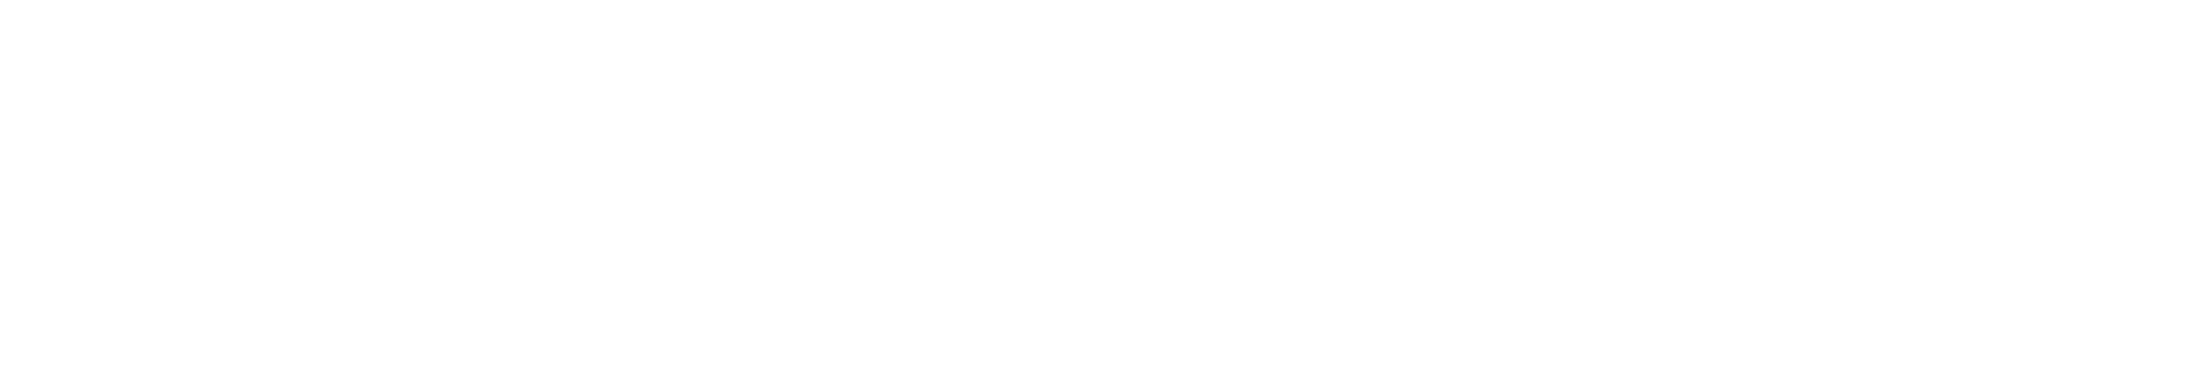 Capcom Logo Black And White - Johns Hopkins Logo White Clipart (2400x2400), Png Download